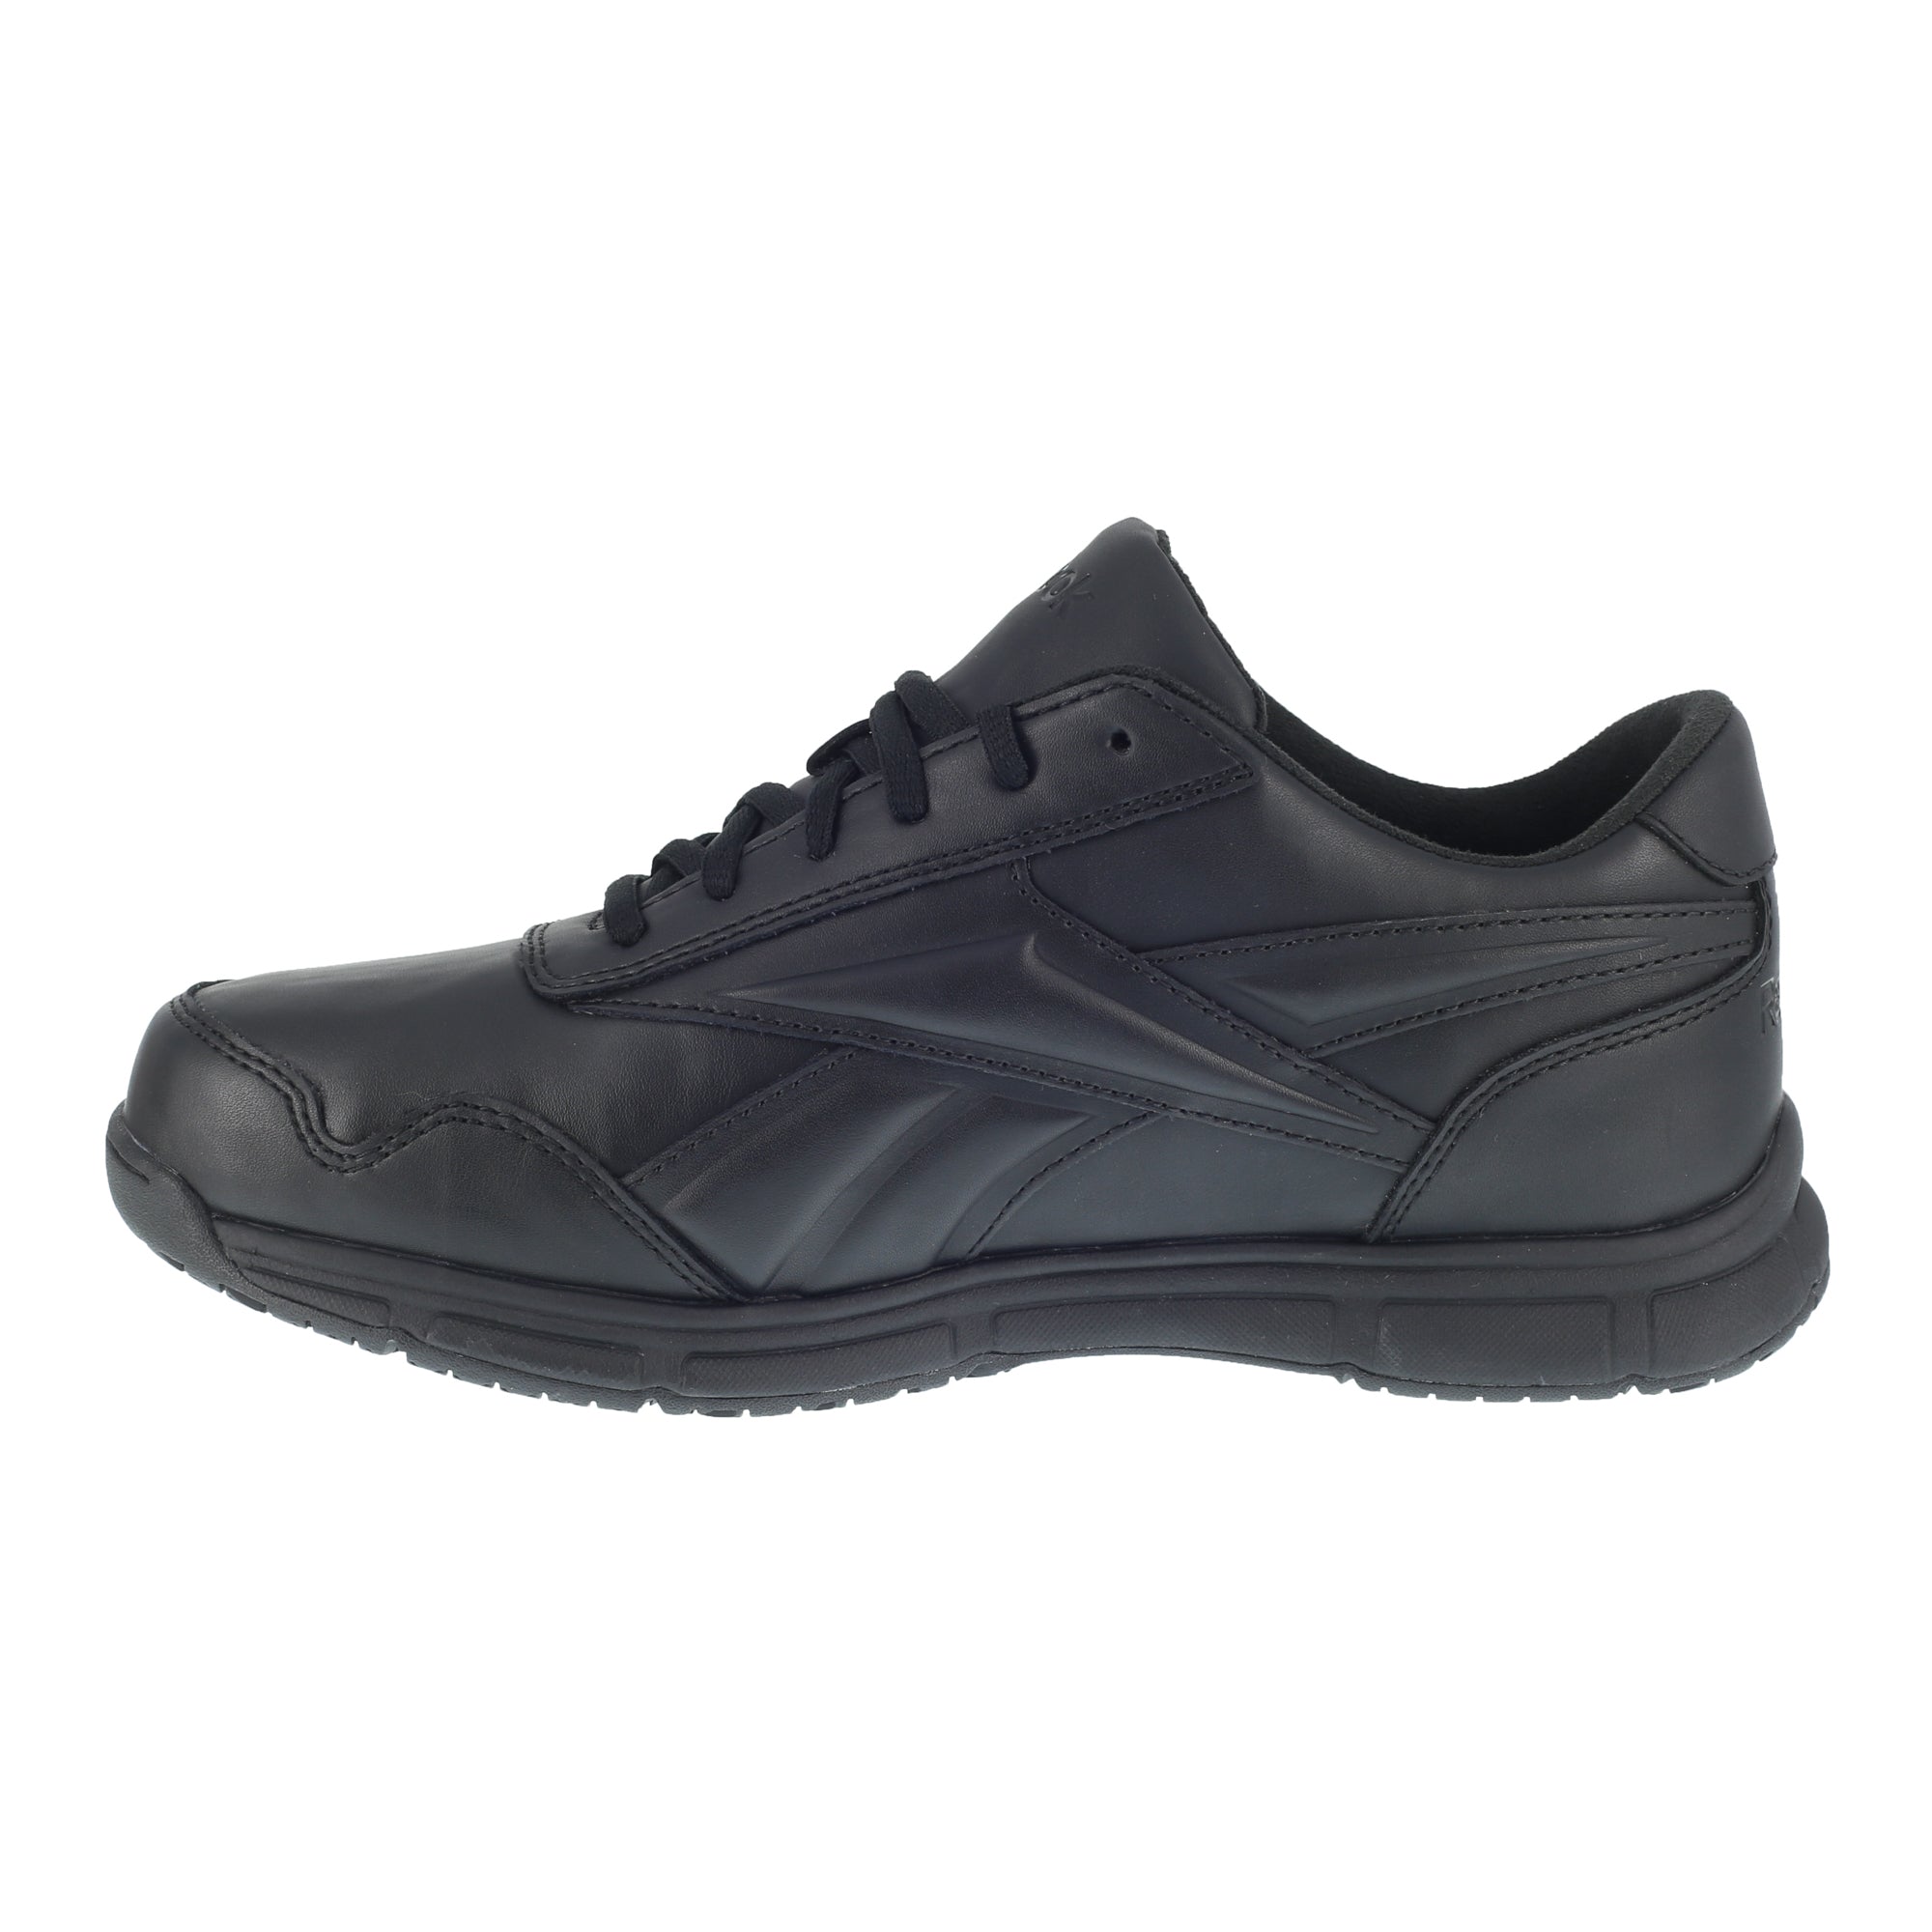 Inferir en términos de Rugido Reebok Womens Black Faux Leather Work Shoes Jorie LT SR Oxford – The  Western Company